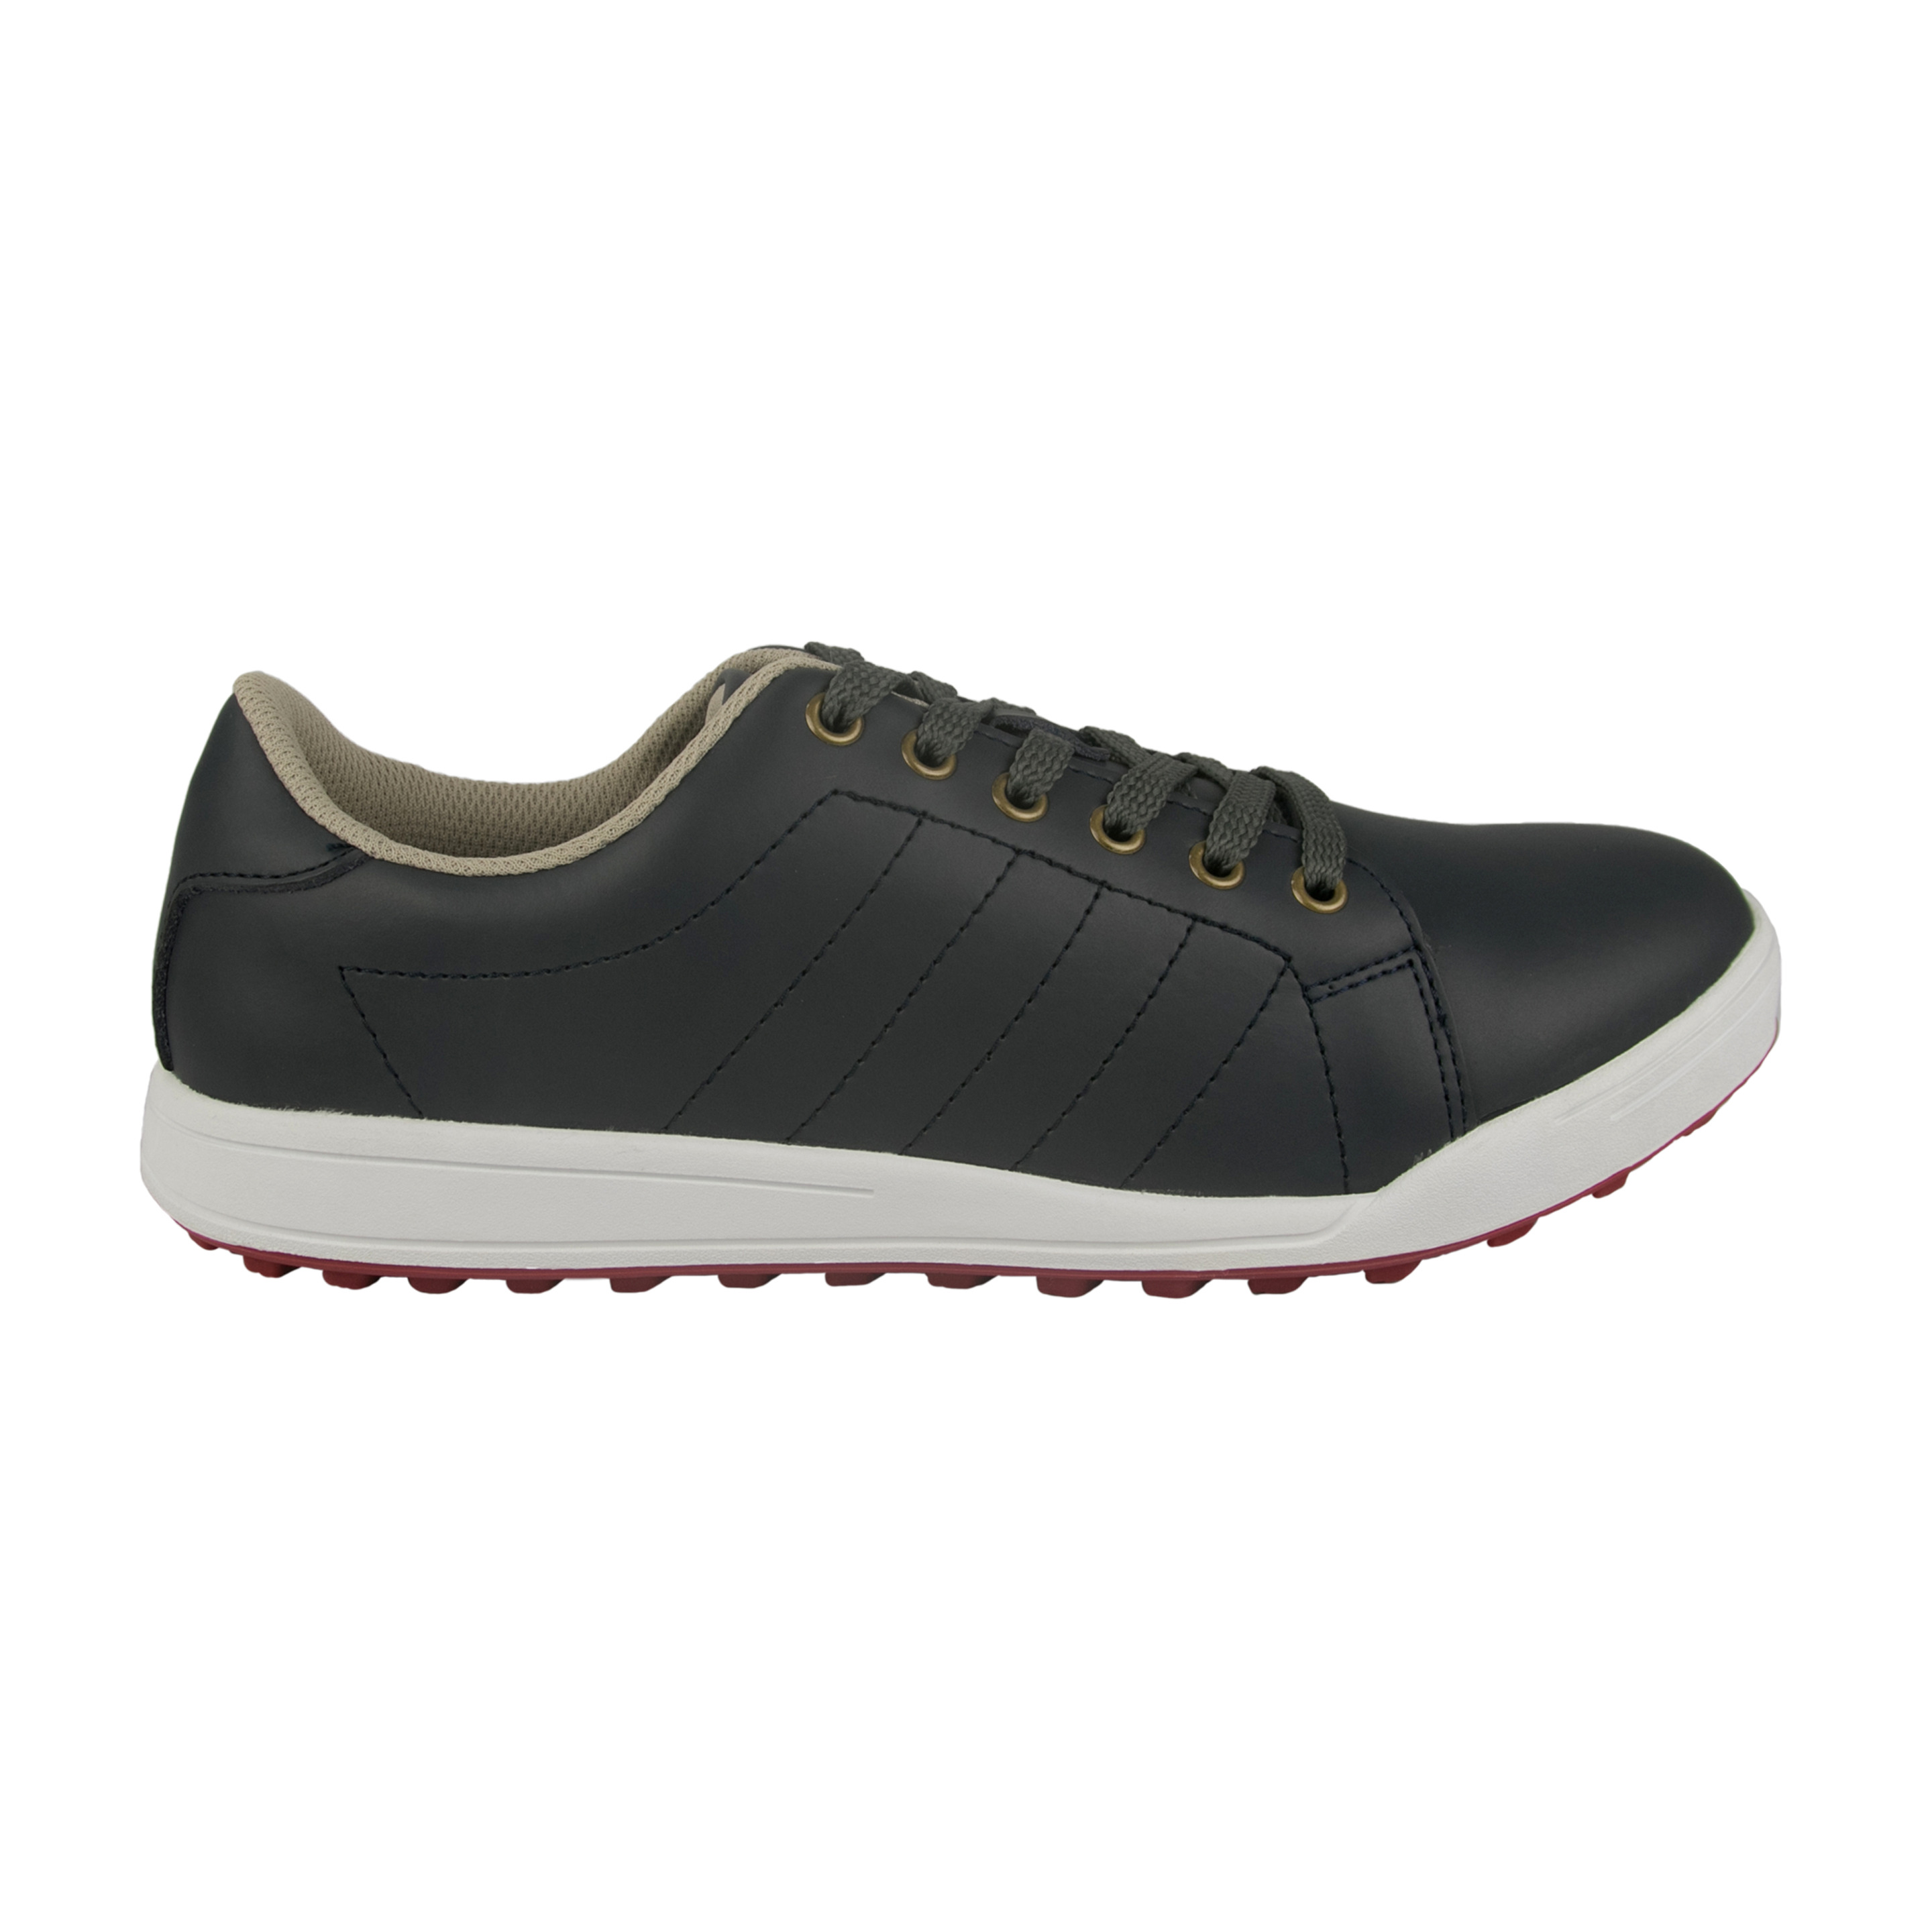 Zerimar Zapatos De Golf Hombre | Deportivas Para Hombre | Zapatos Hombre Golf | Zapato Golf Piel